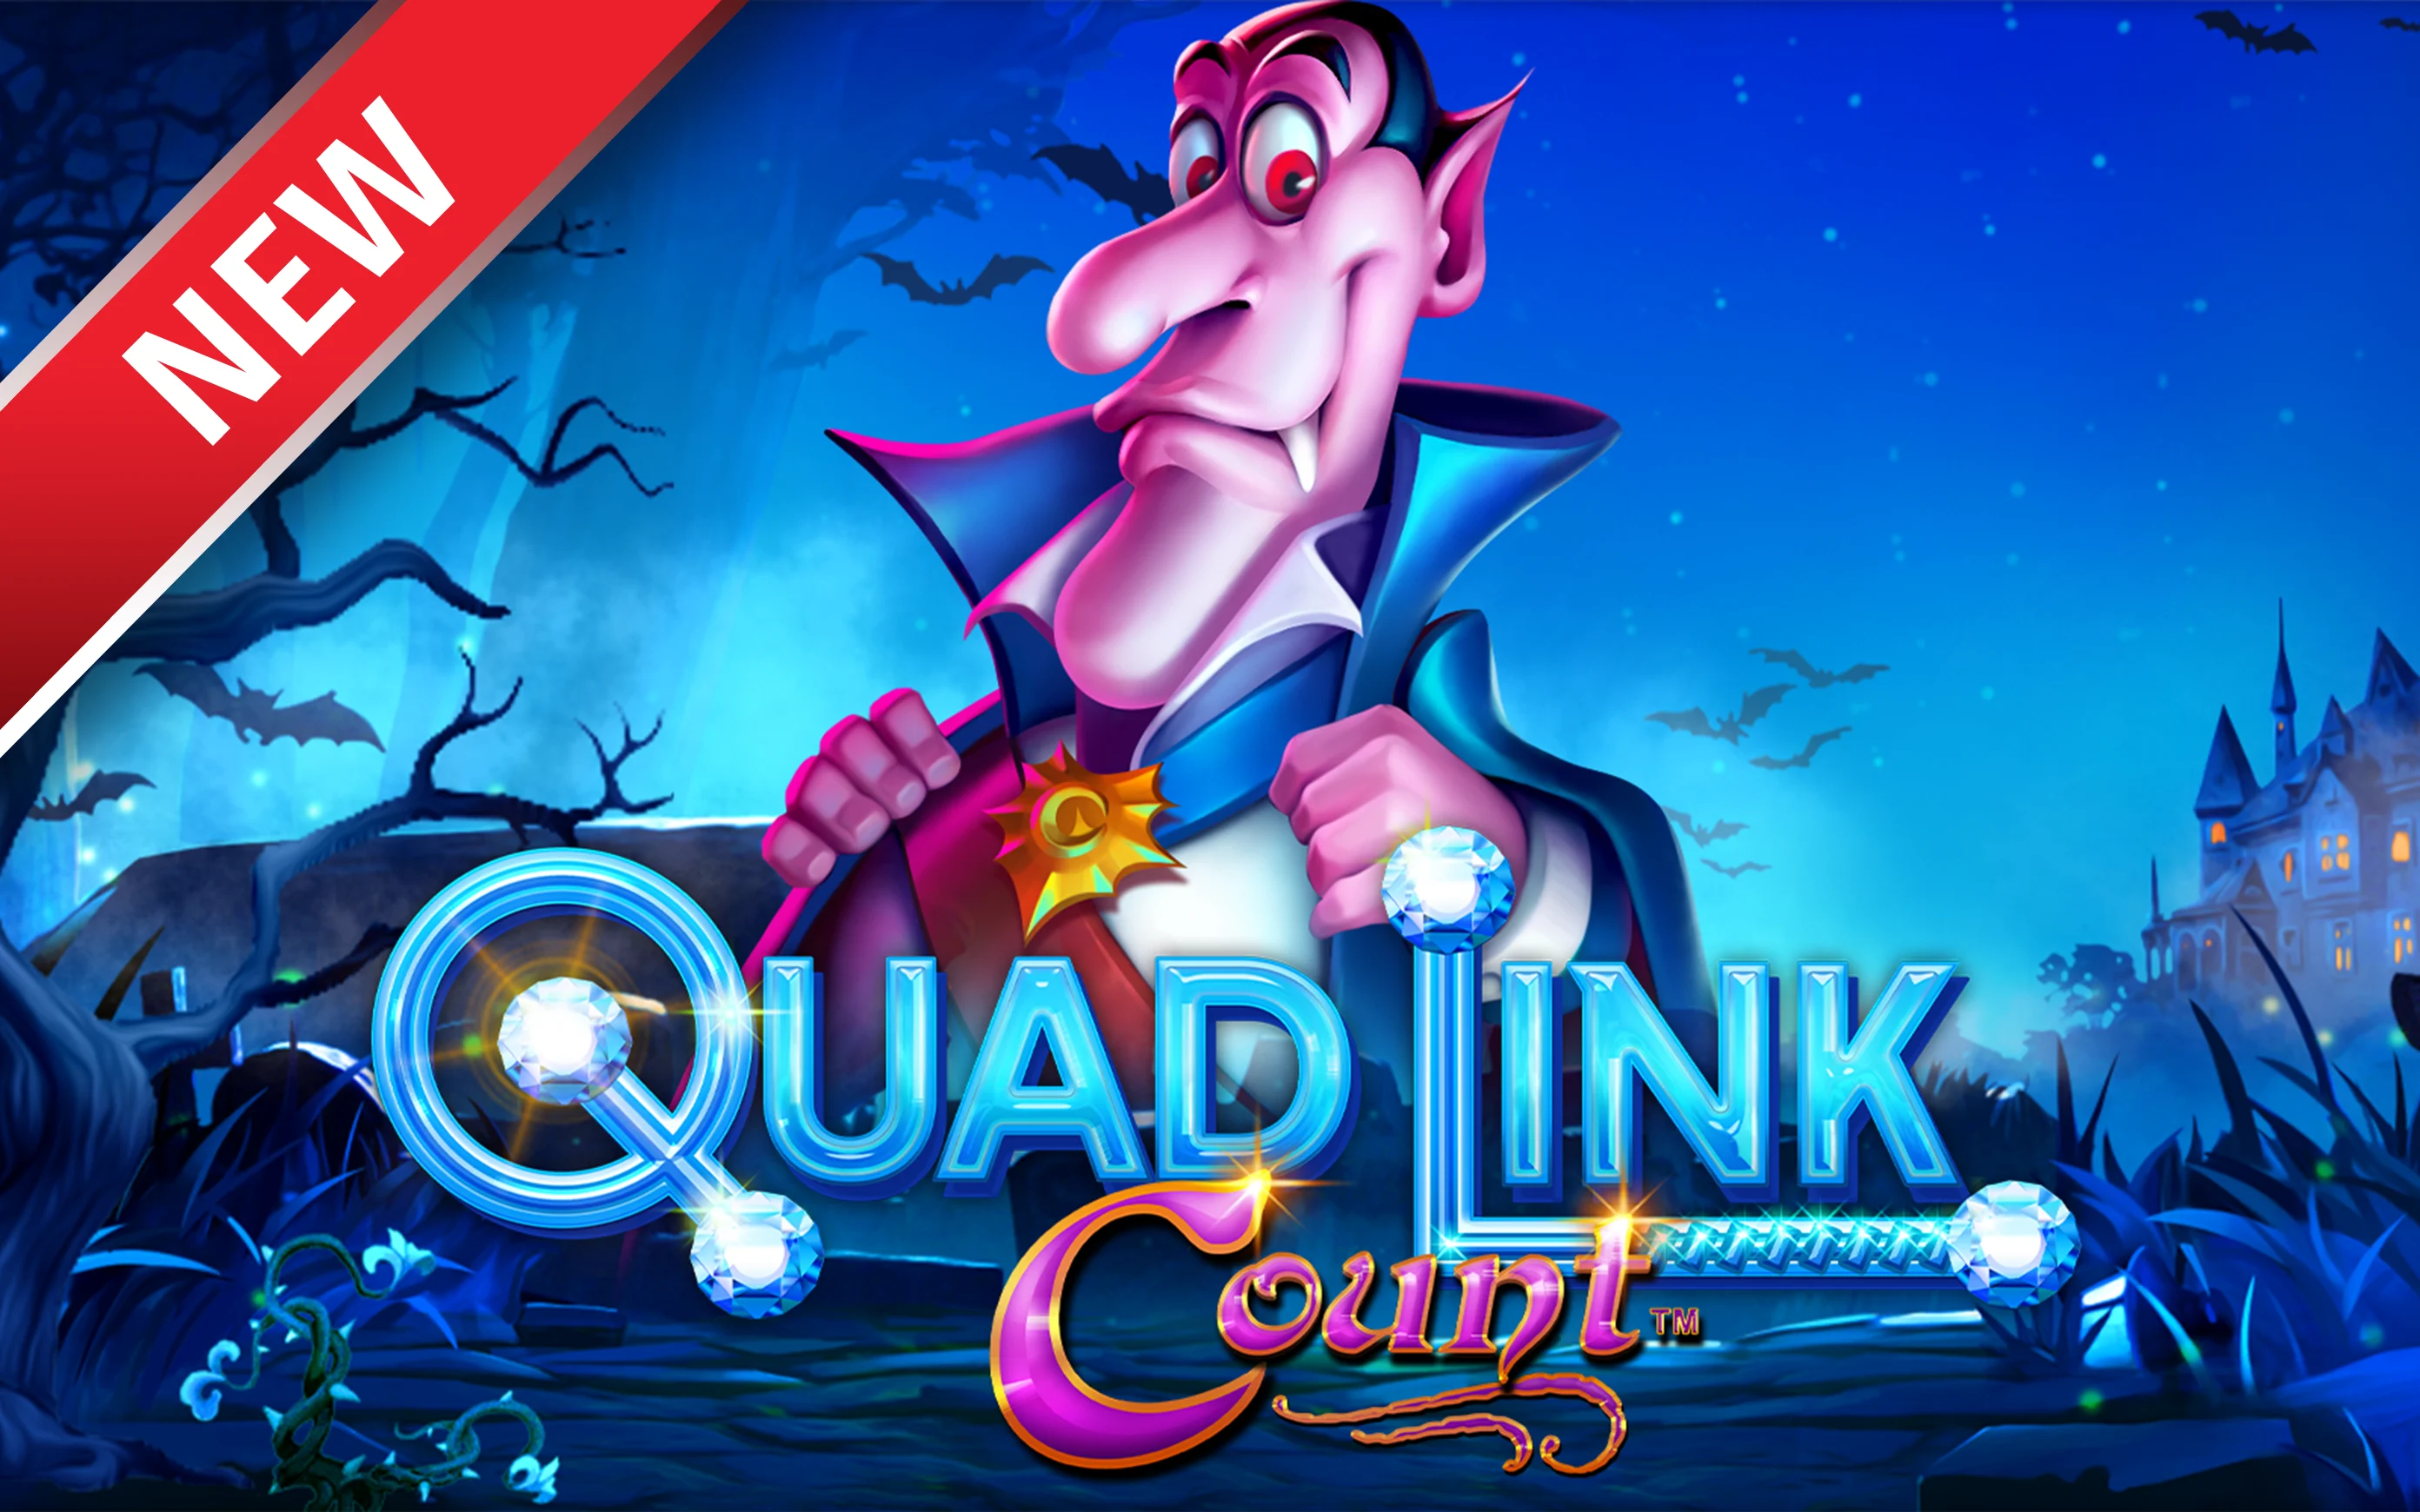 Gioca a Quad Link: Count™ sul casino online Starcasino.be